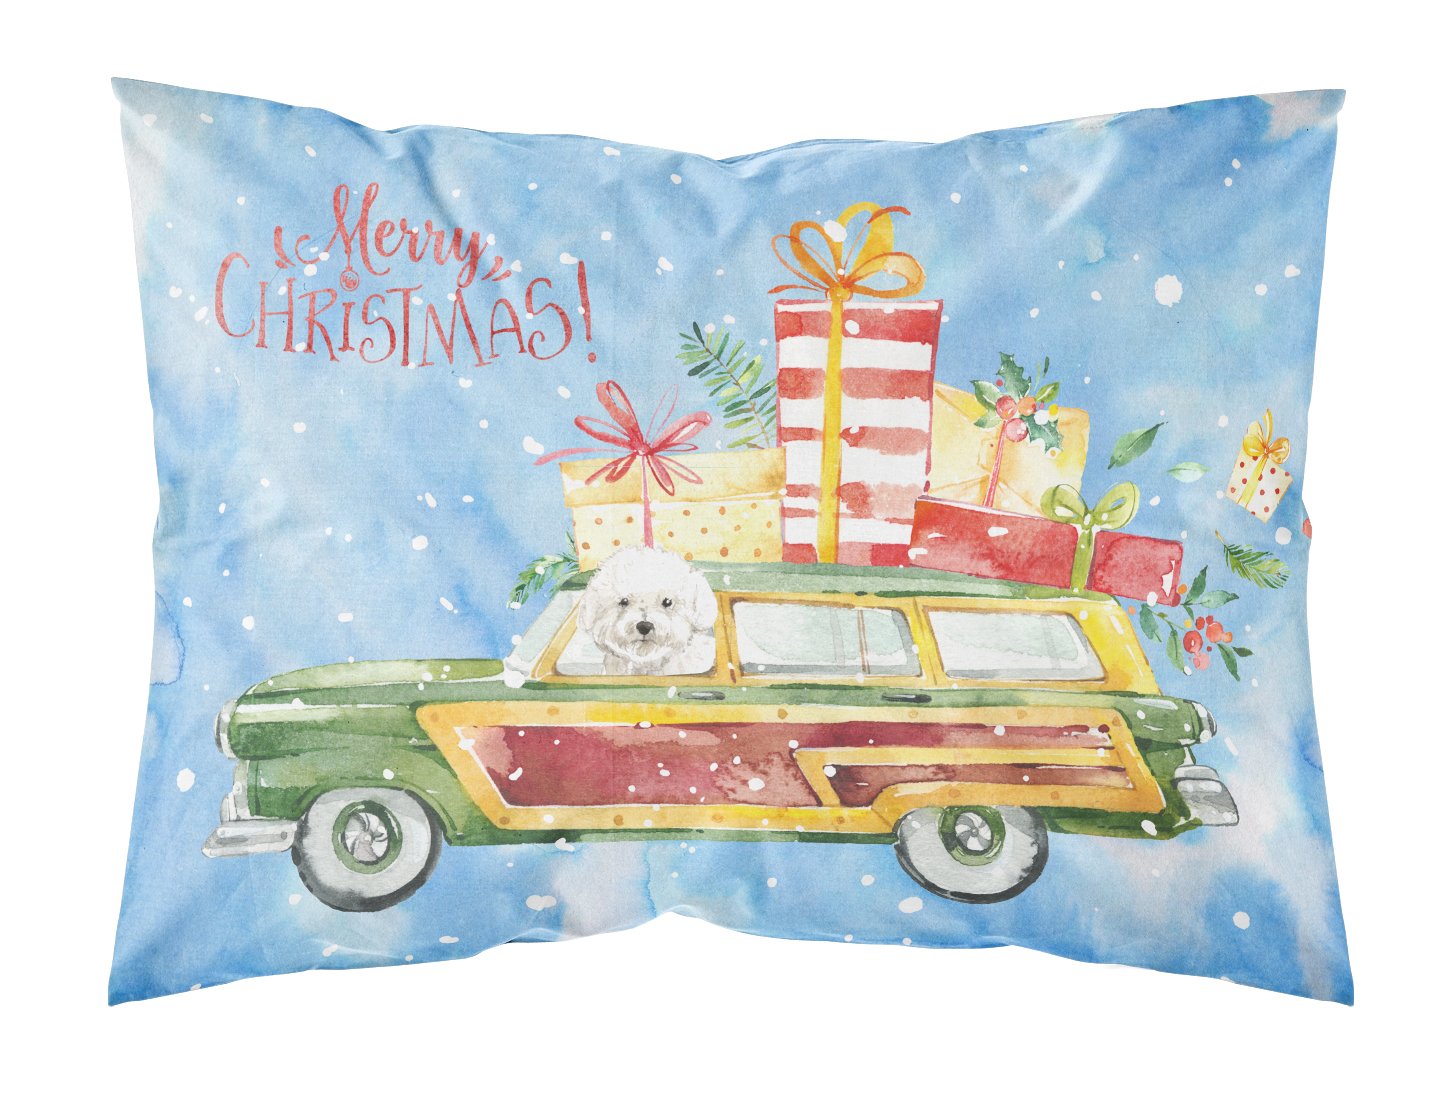 Merry Christmas Bichon Frisé Fabric Standard Pillowcase CK2395PILLOWCASE by Caroline's Treasures